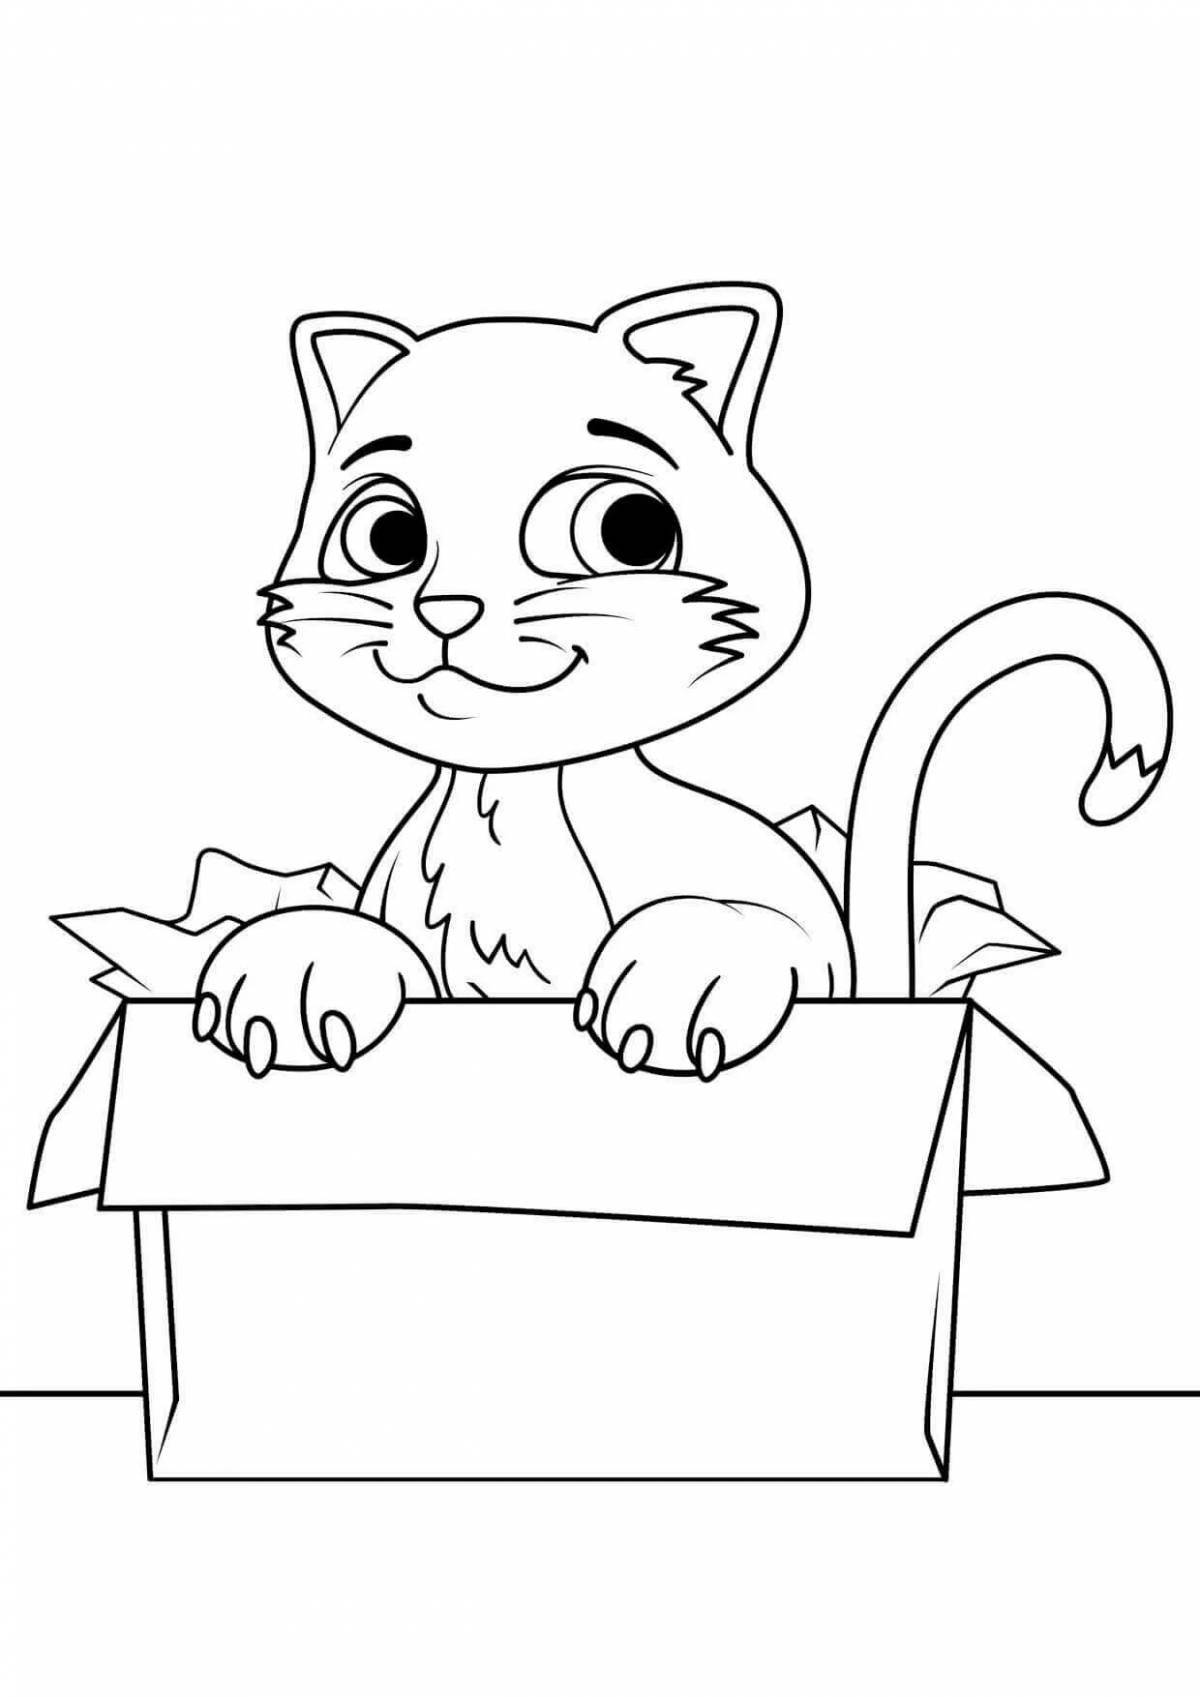 Joyful cat coloring book